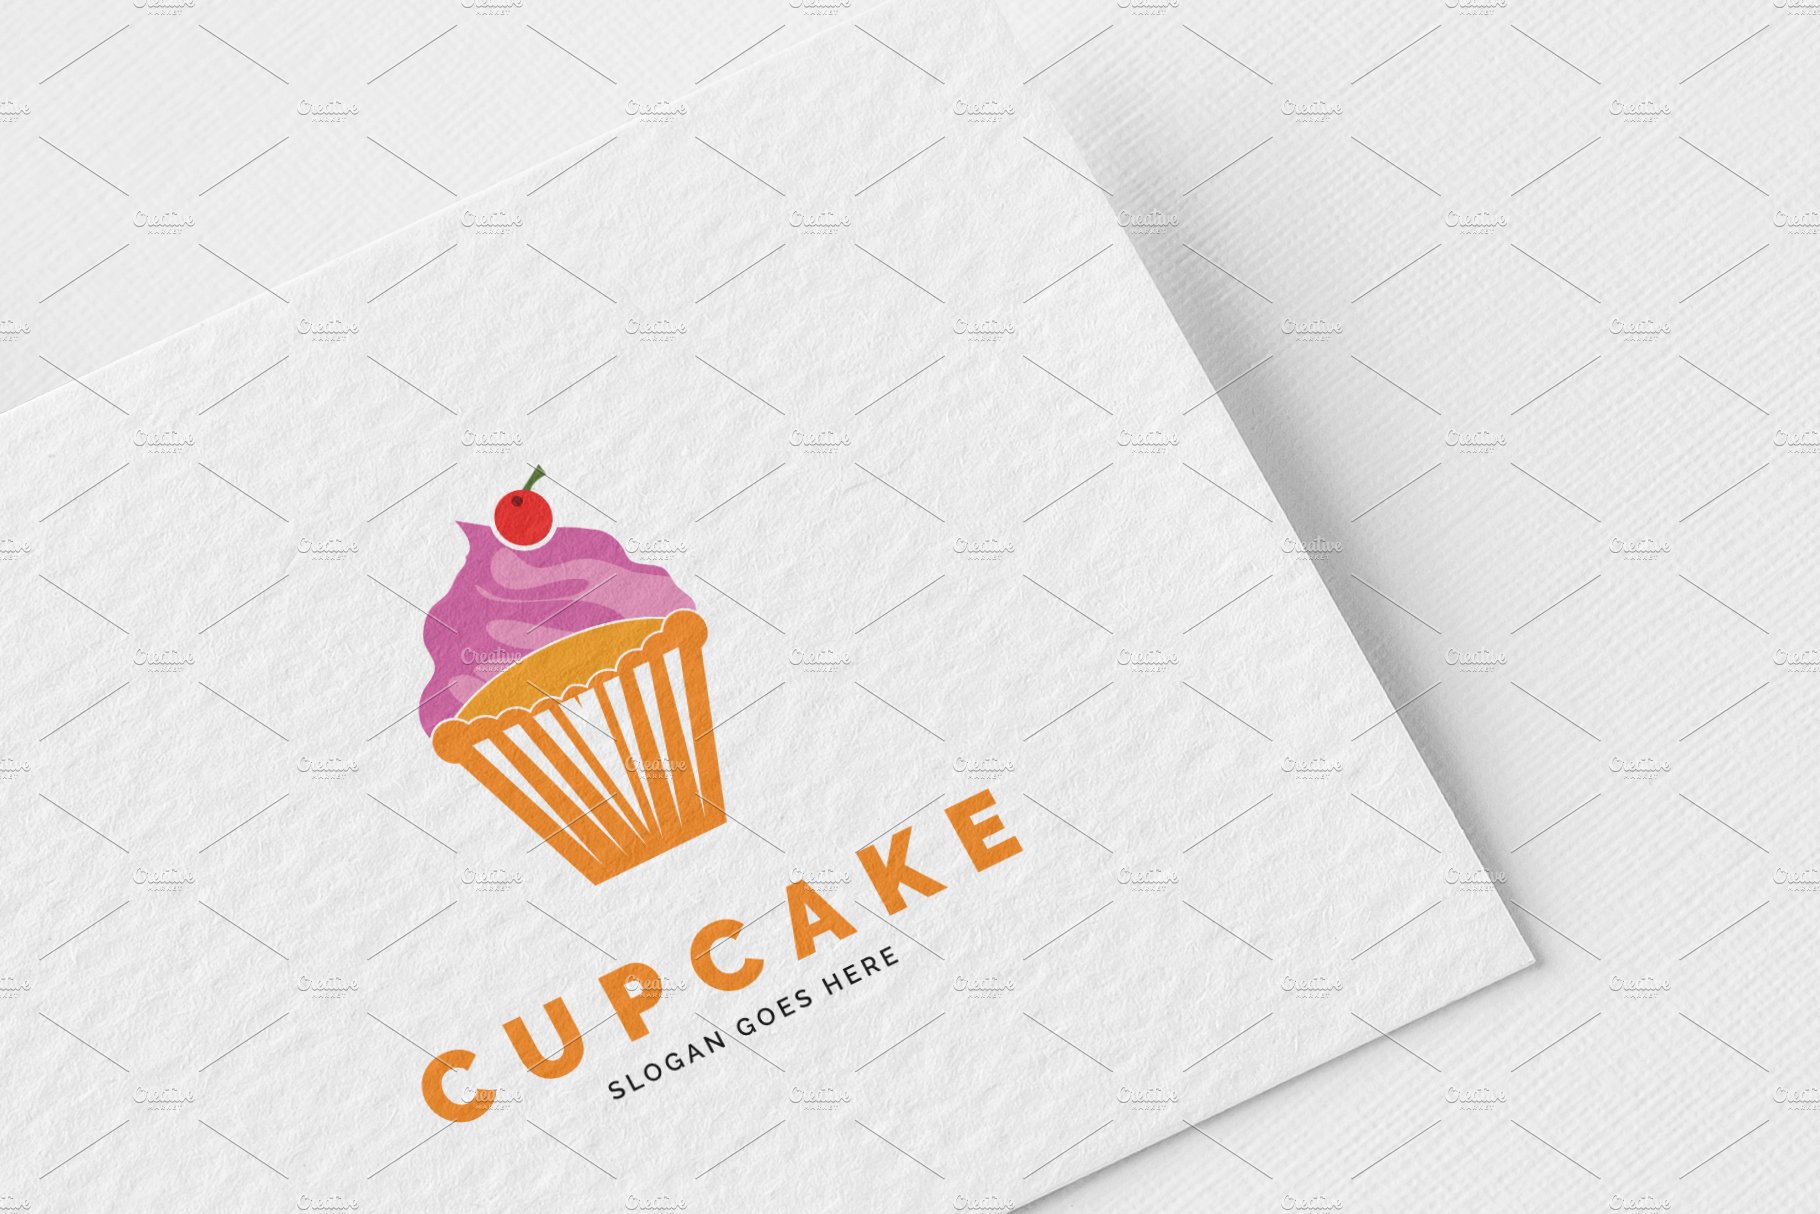 Cupcake Logo Template cover image.